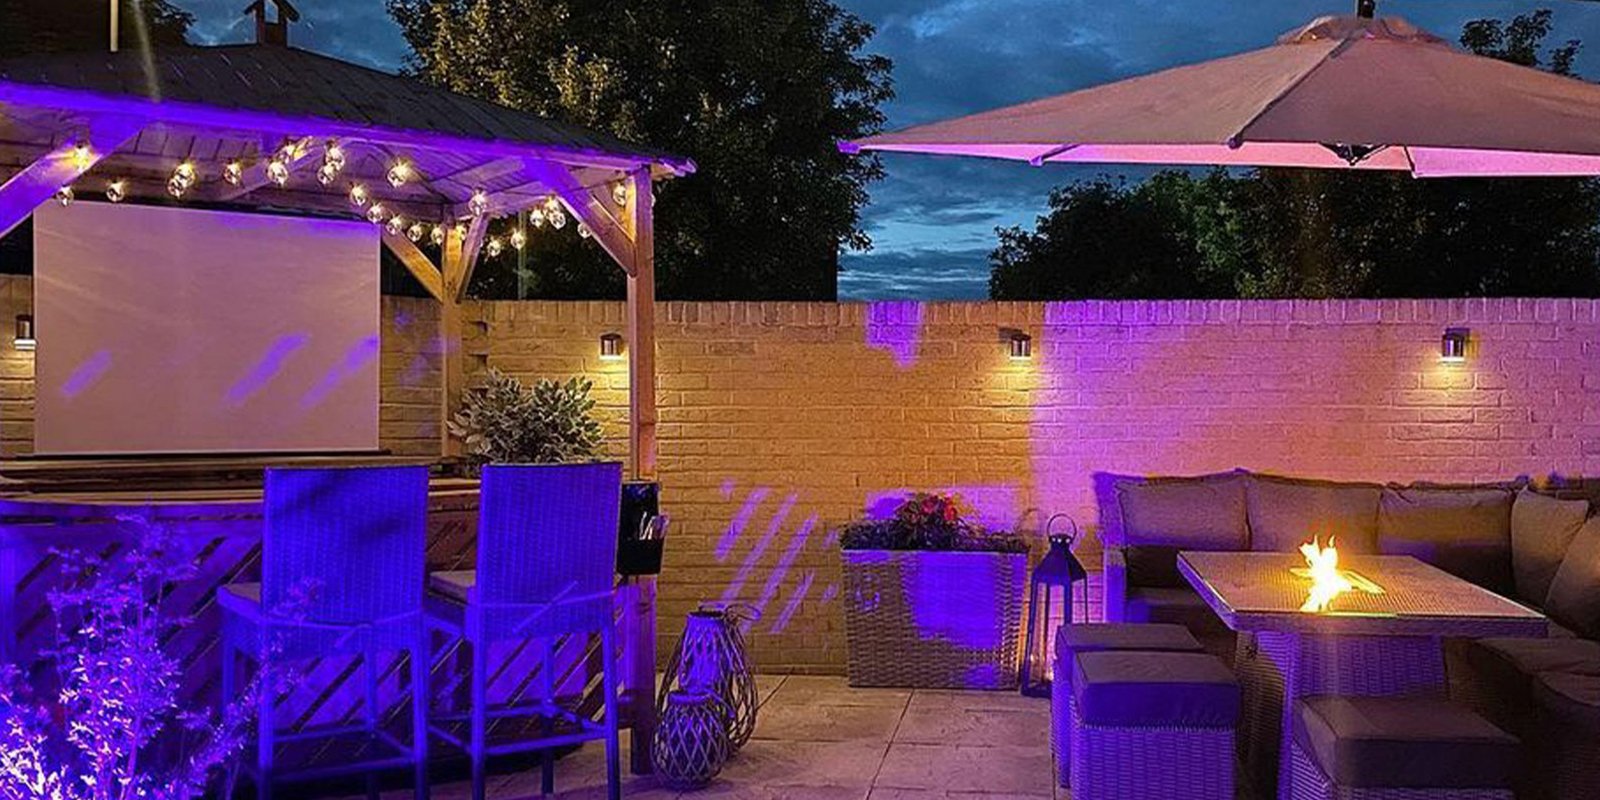 Create An Outdoor Cinema Space In Your Garden